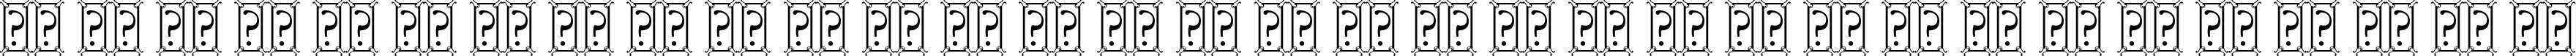 Пример написания русского алфавита шрифтом Plantagenet Cherokee